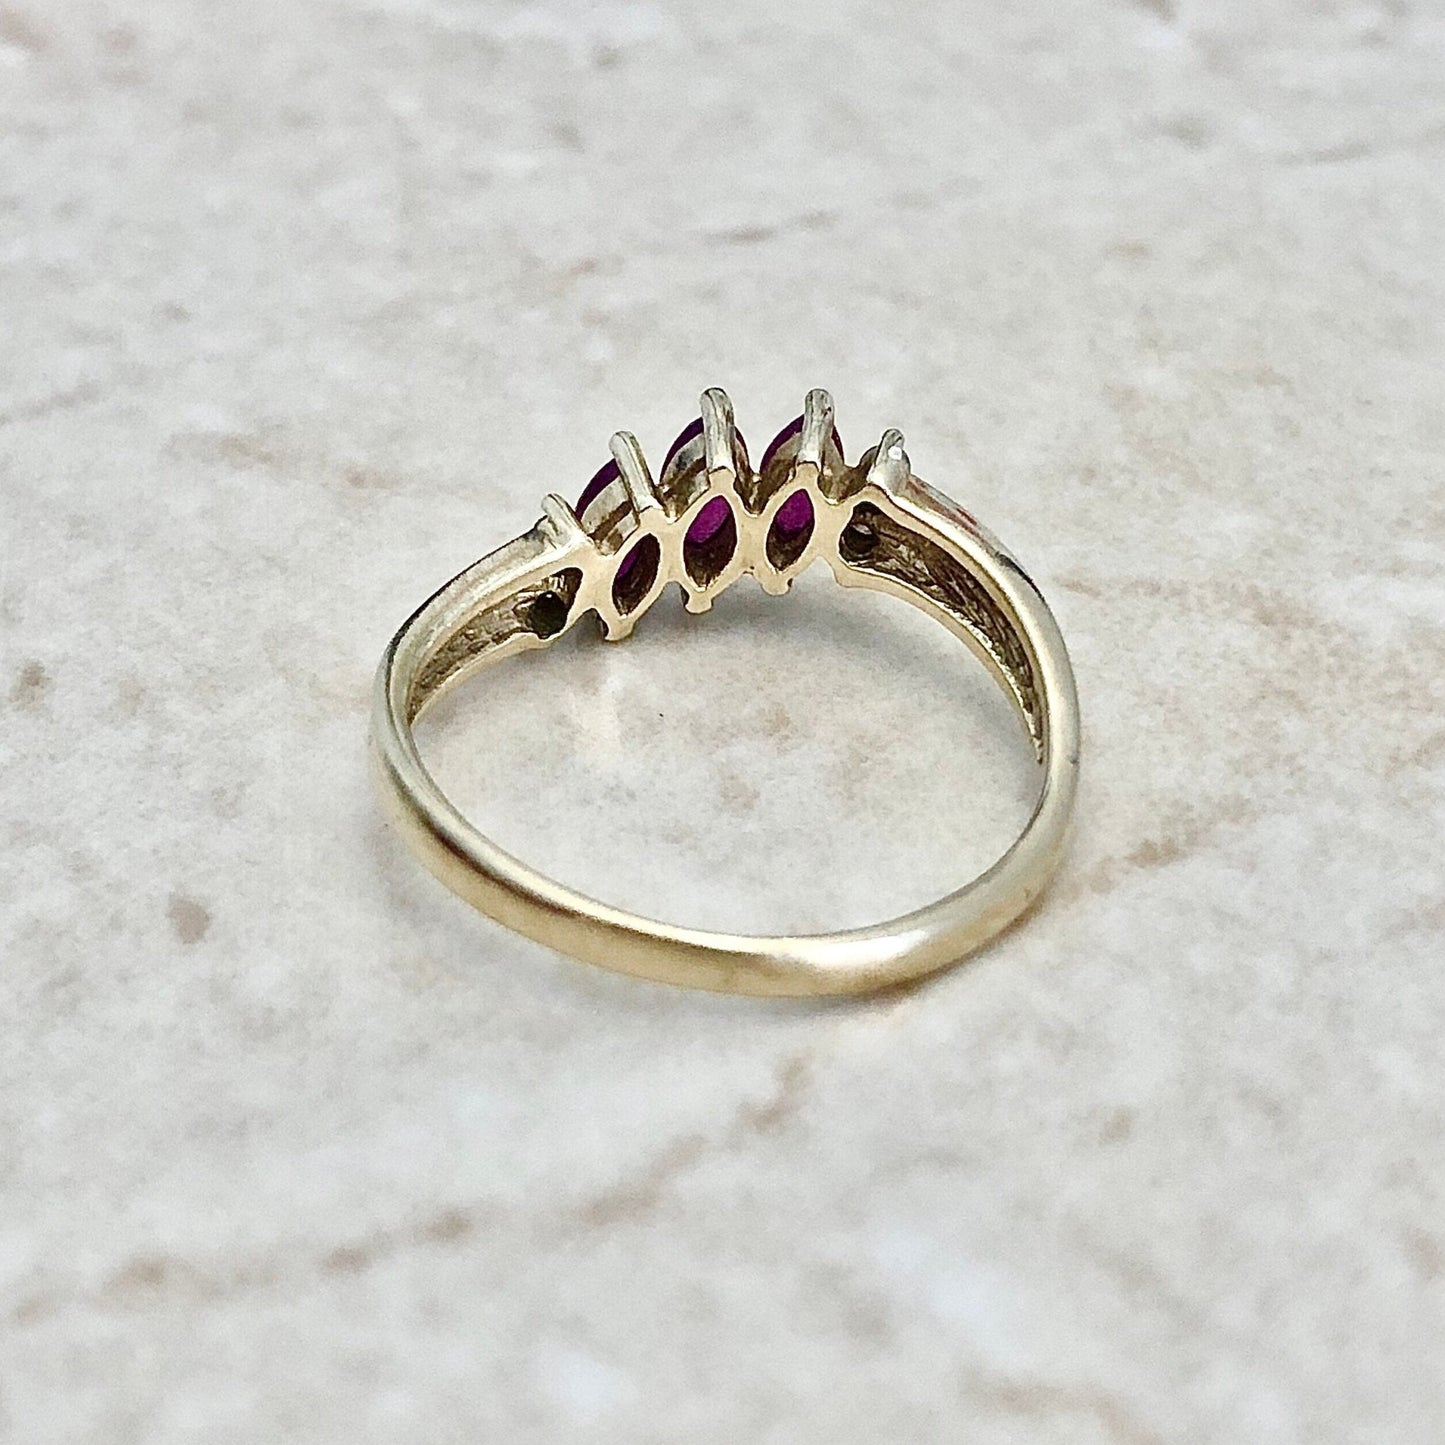 Vintage Ruby & Diamond Ring - 14K Yellow Gold - Genuine Gemstone - Marquise Rubies - July Birthstone - Size 6.5 - Birthday Gift